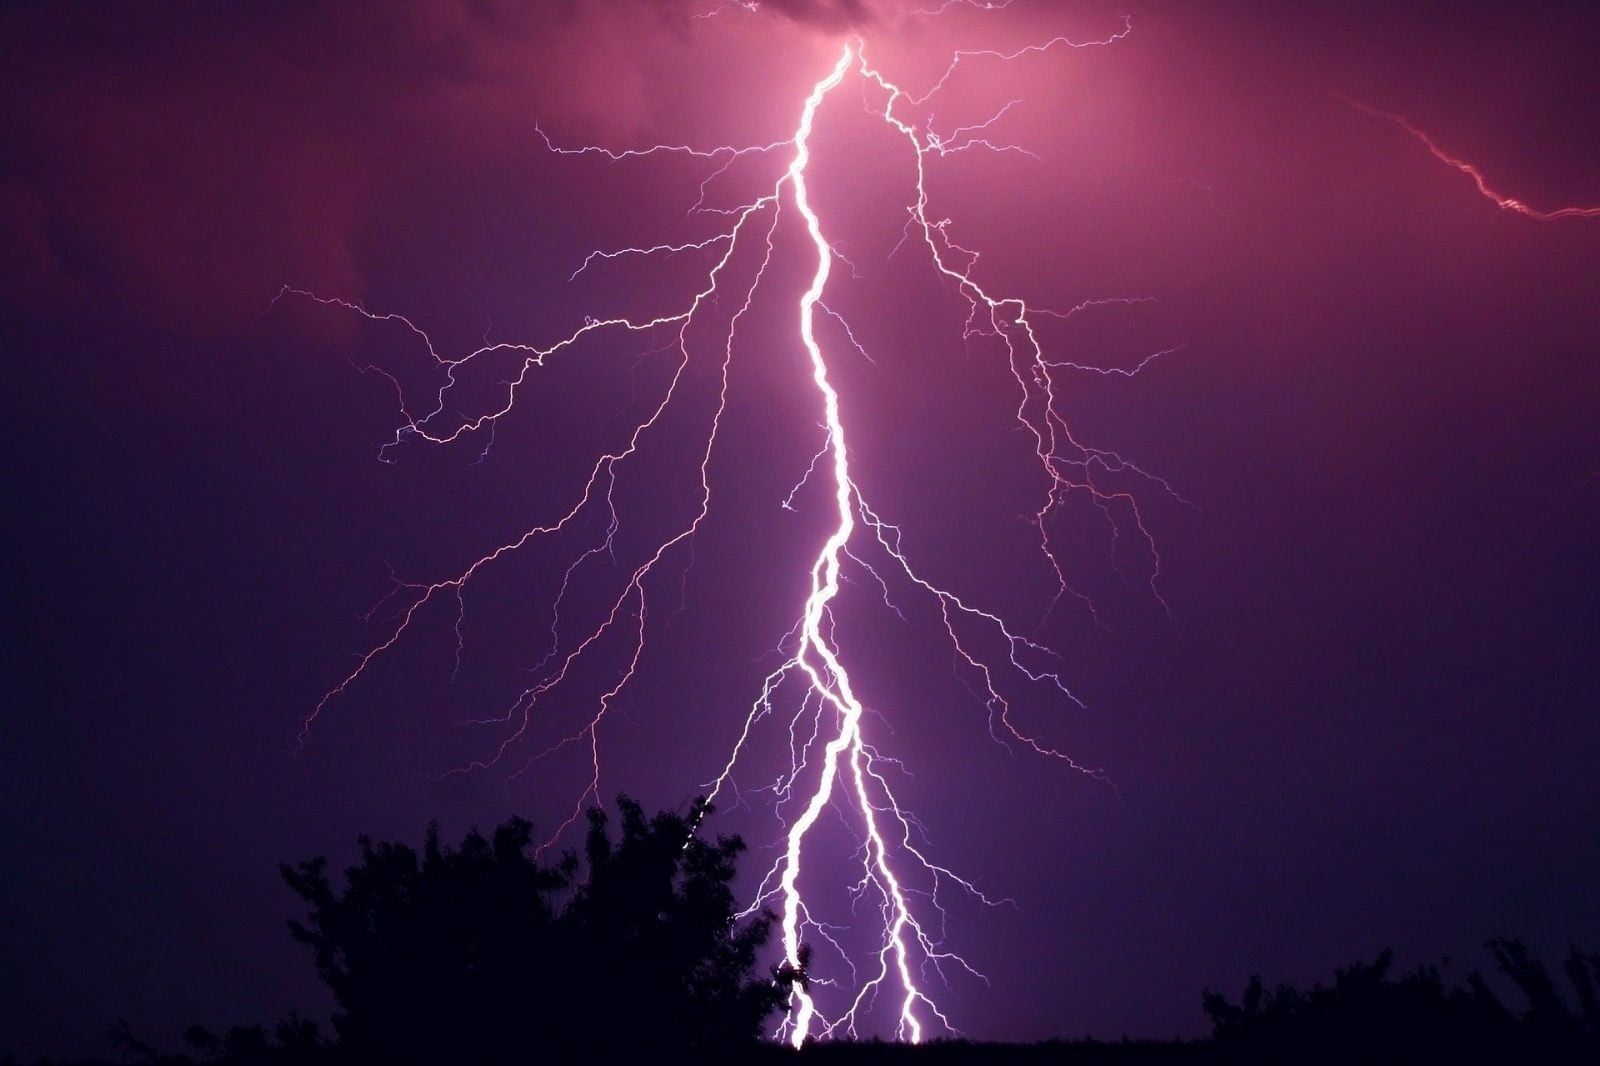 thunder by ron rev fenomeno from pixabay Creative Commons cc0 thunder by ron rev fenomeno from pixabay Creative Commons cc0 https://pixabay.com/photos/thunder-thunderstorm-purple-storm-953118/